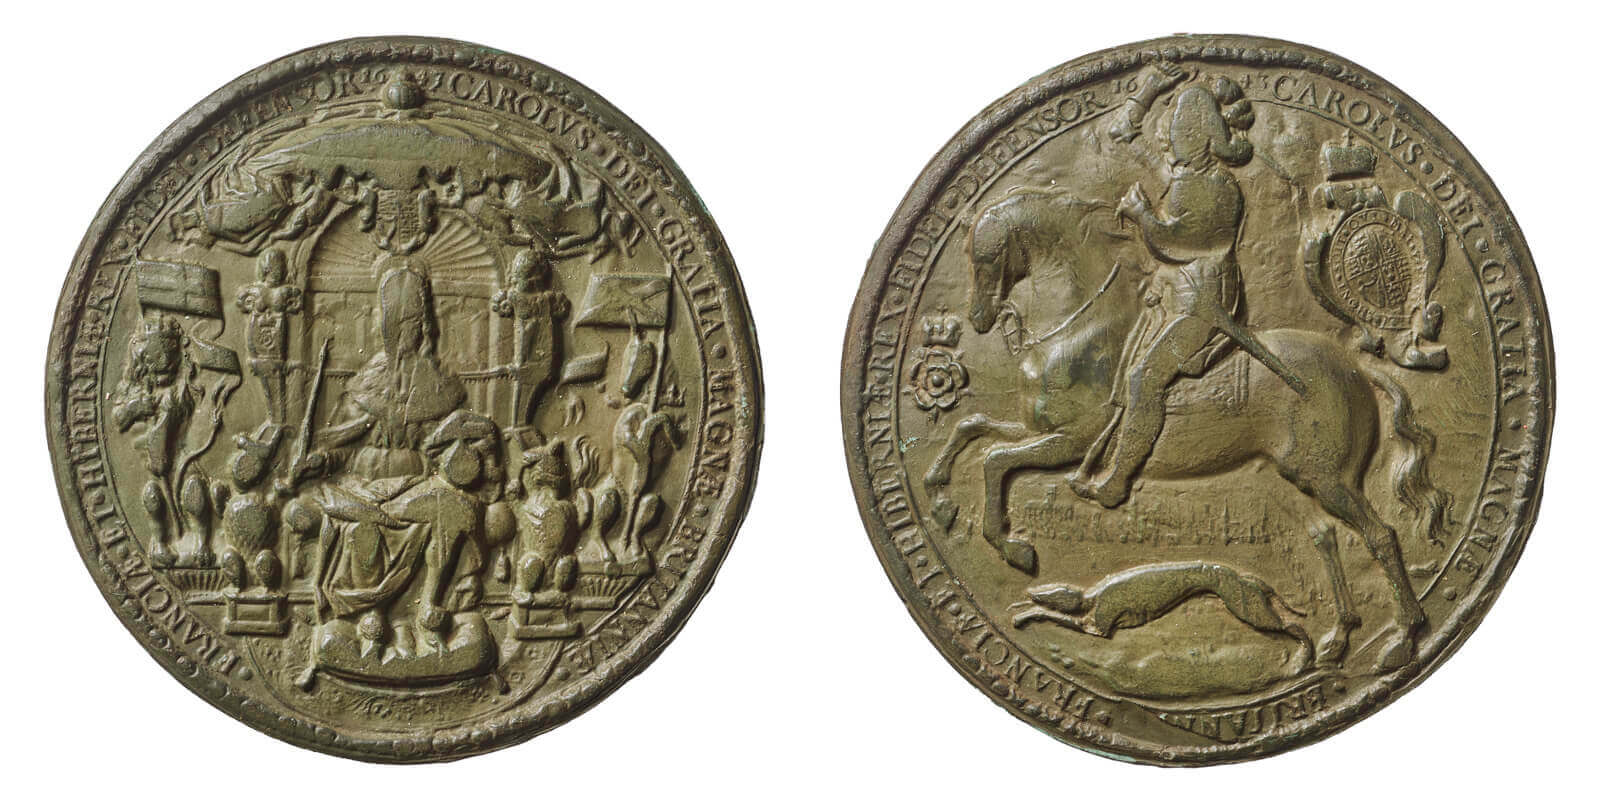 Charles I Great Seal.jpg